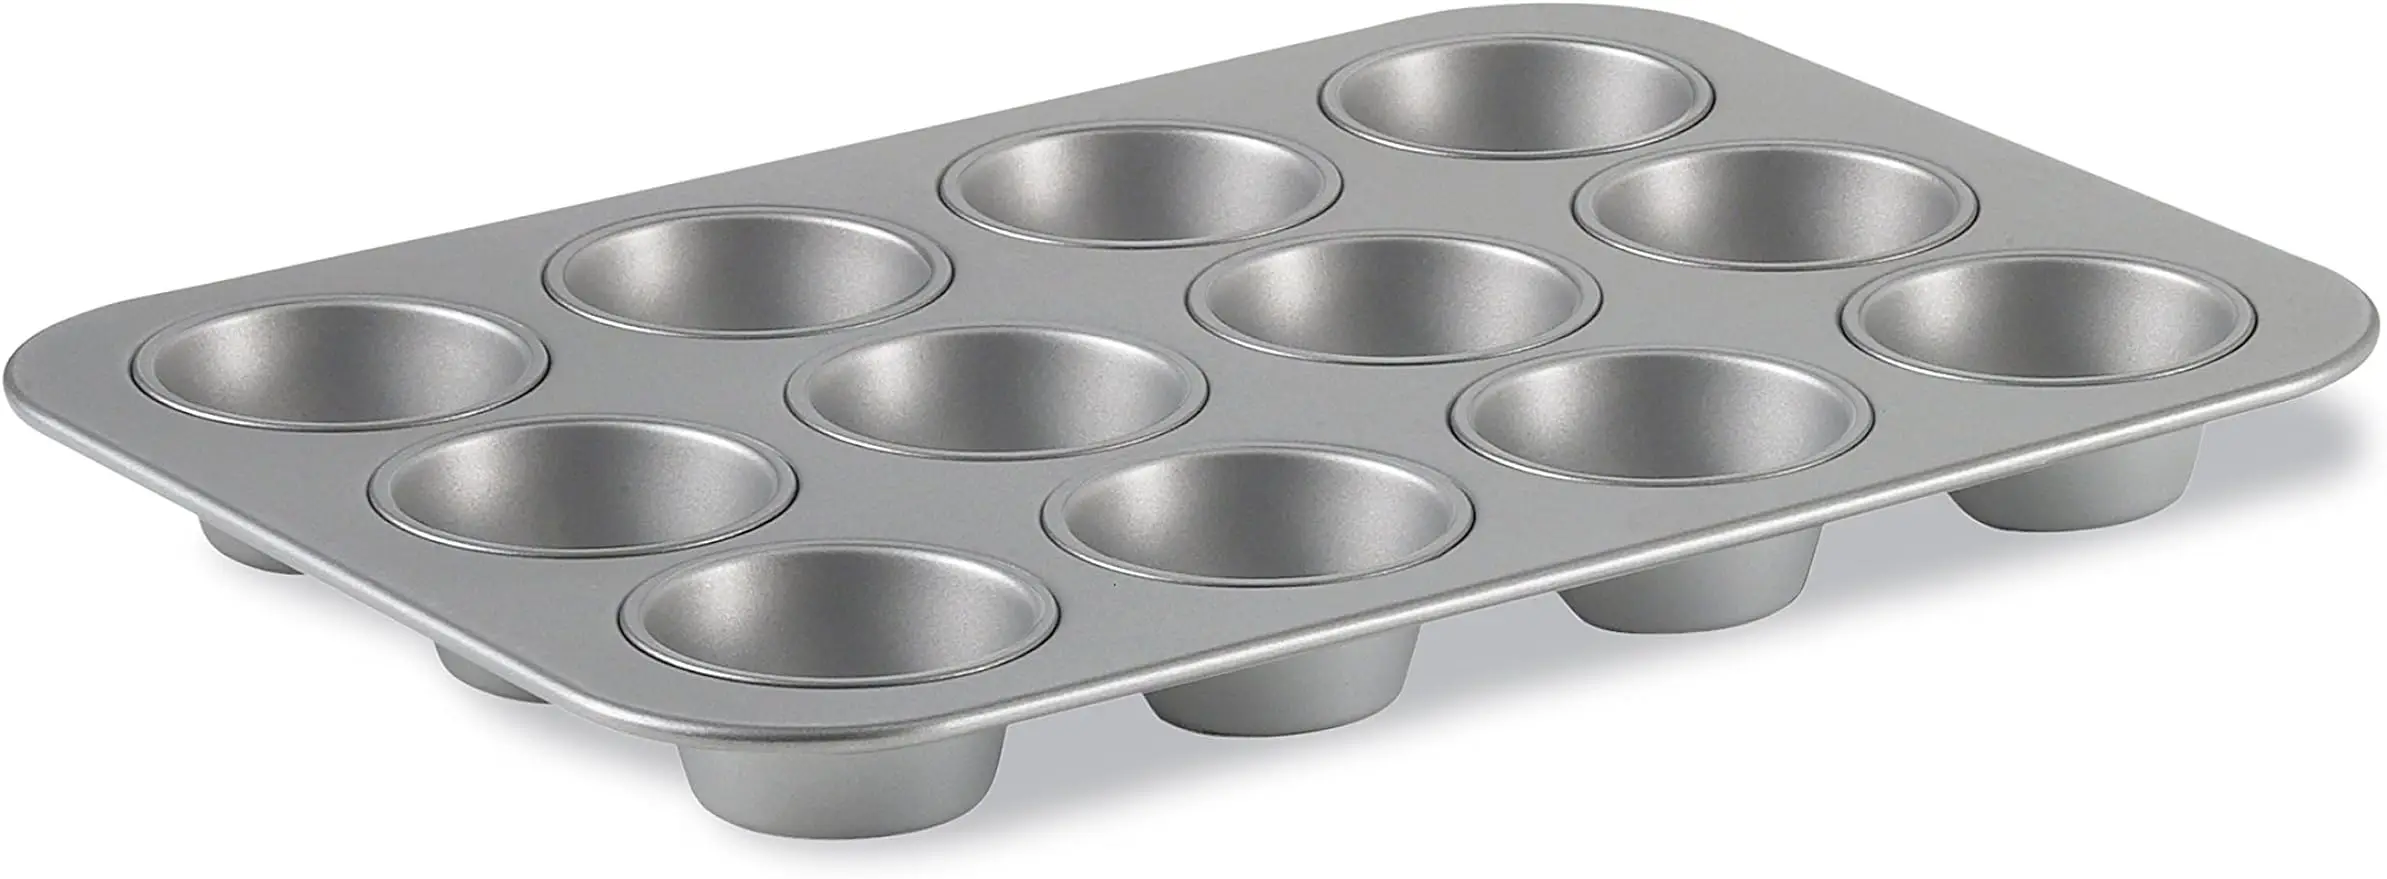 https://ae01.alicdn.com/kf/Sa611ddc81f7846d191e61d08fb39b64dw/Home-Kitchen-Bakeware-Calphalon-Nonstick-Bakeware-Cupcake-Muffin-Pan-12-cup-Dishwasher-Safe.jpg